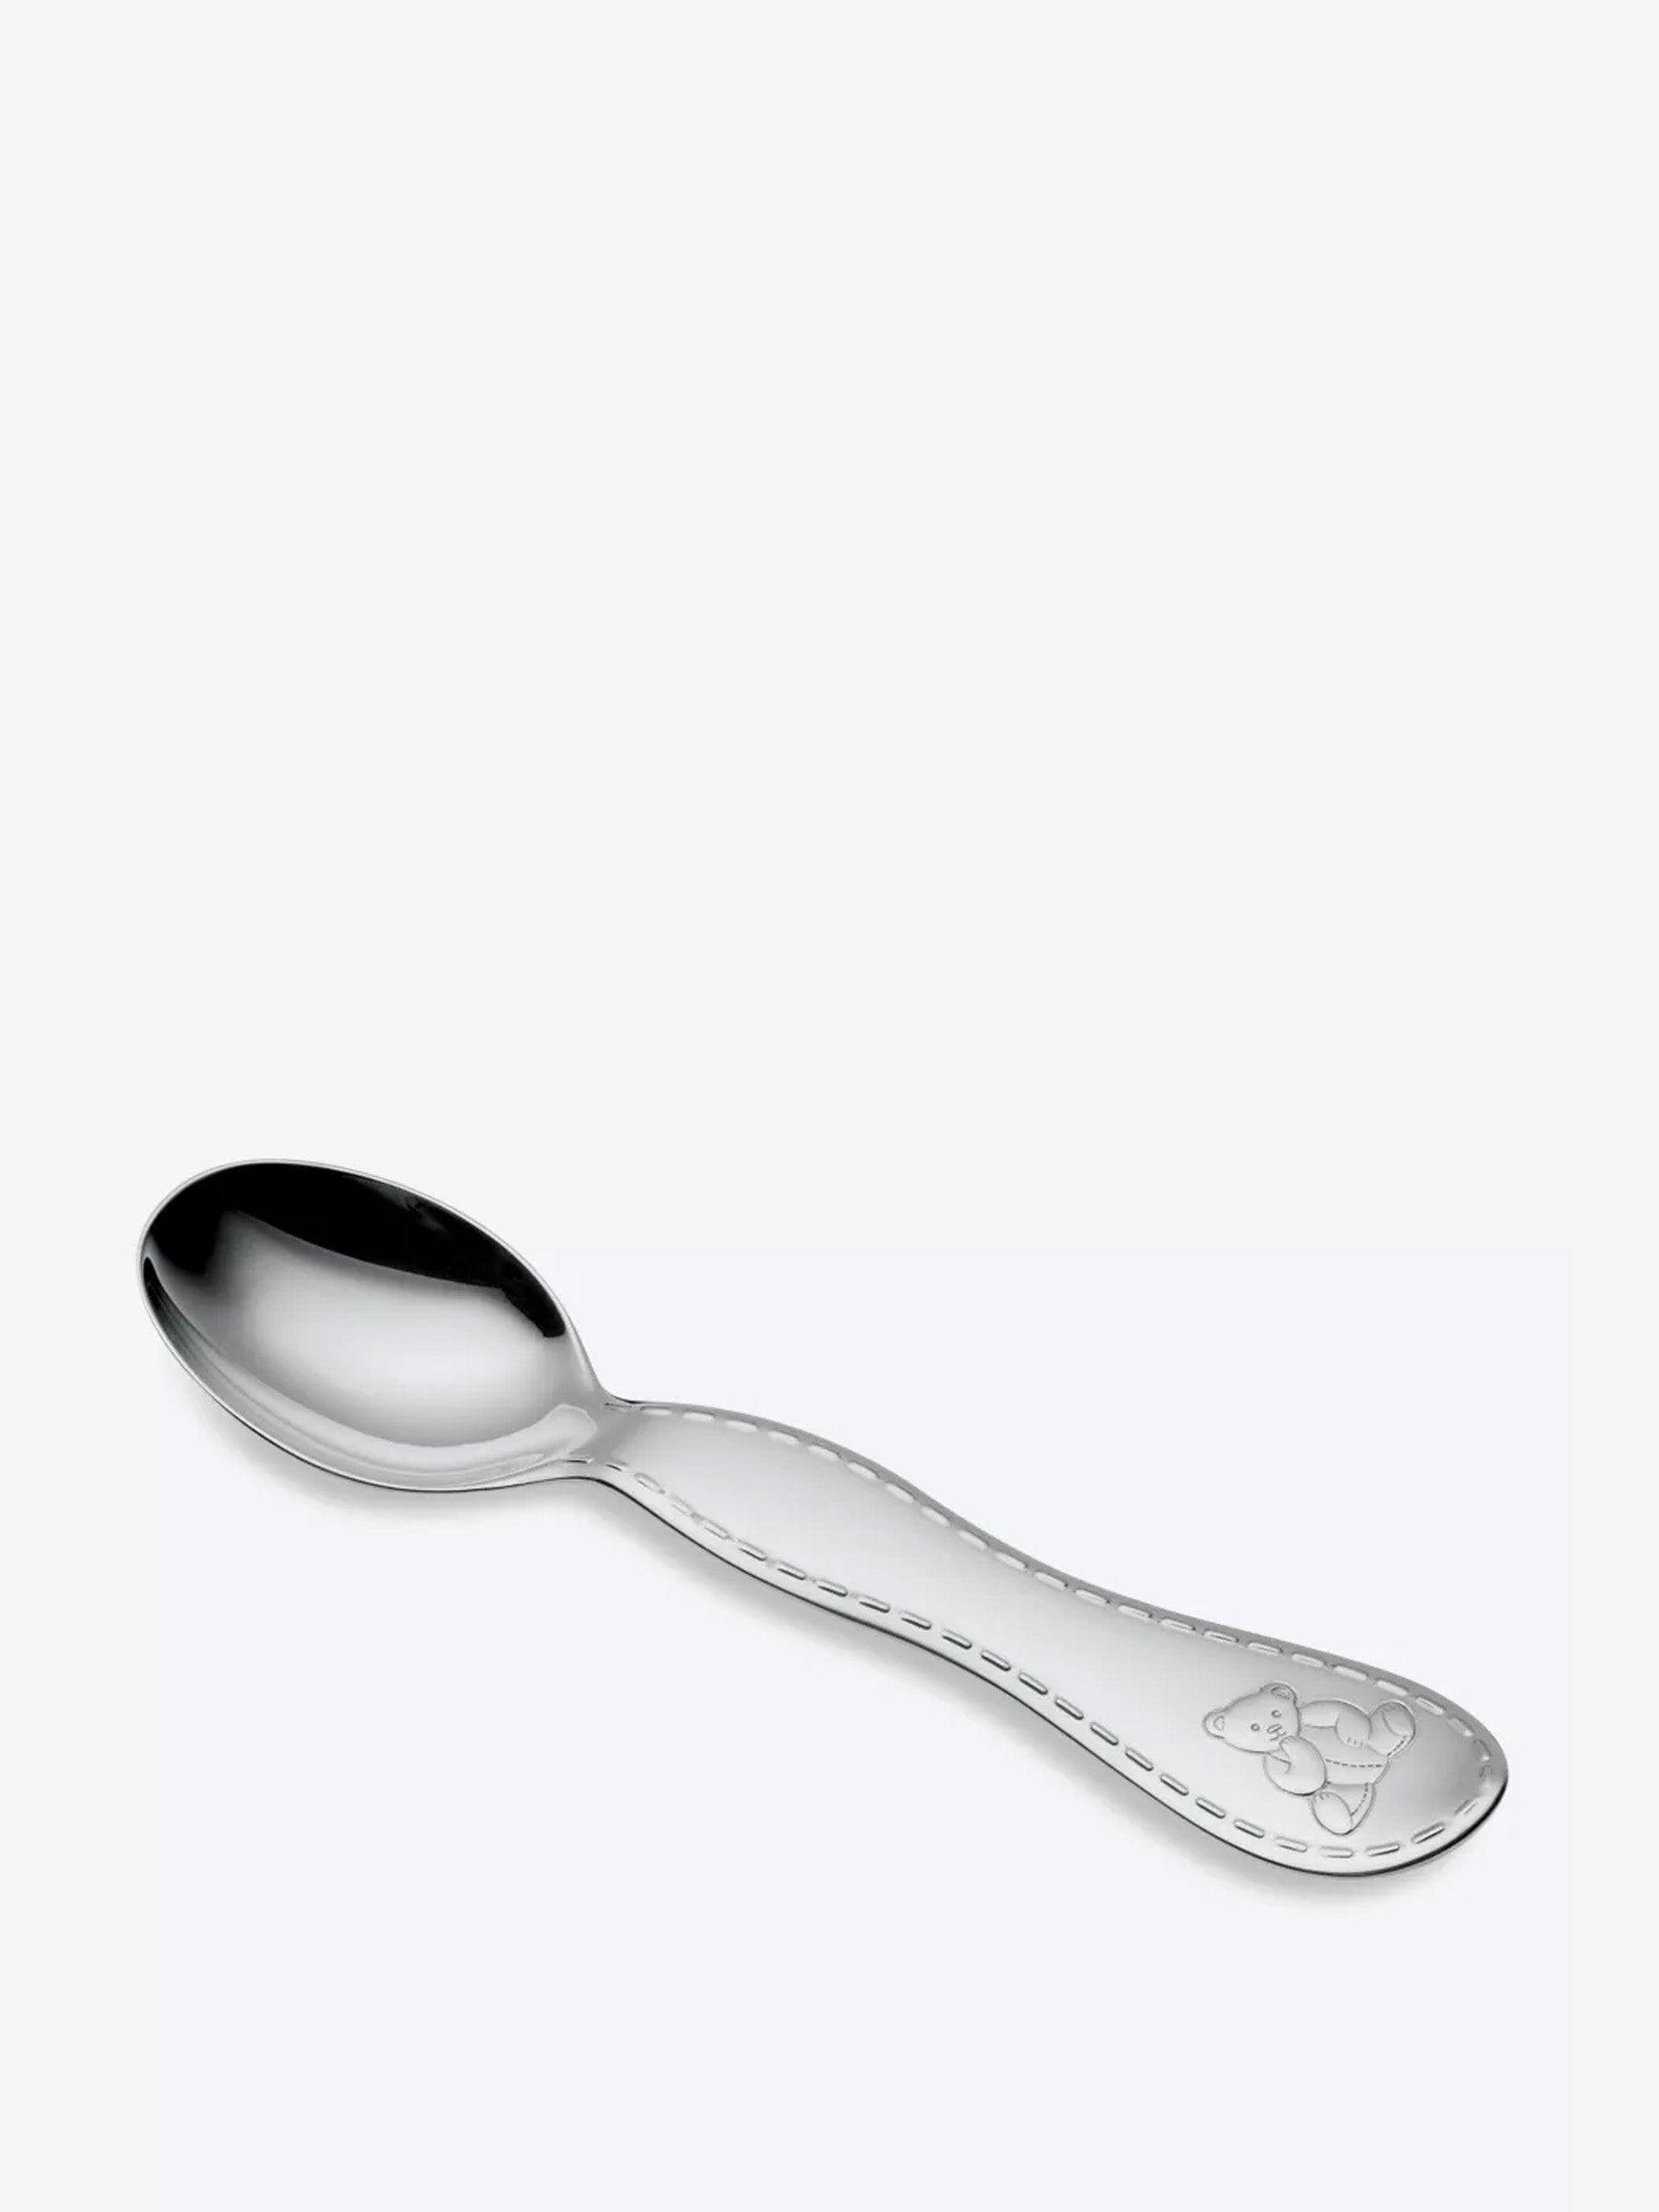 Charlie Bear silver-plated spoon